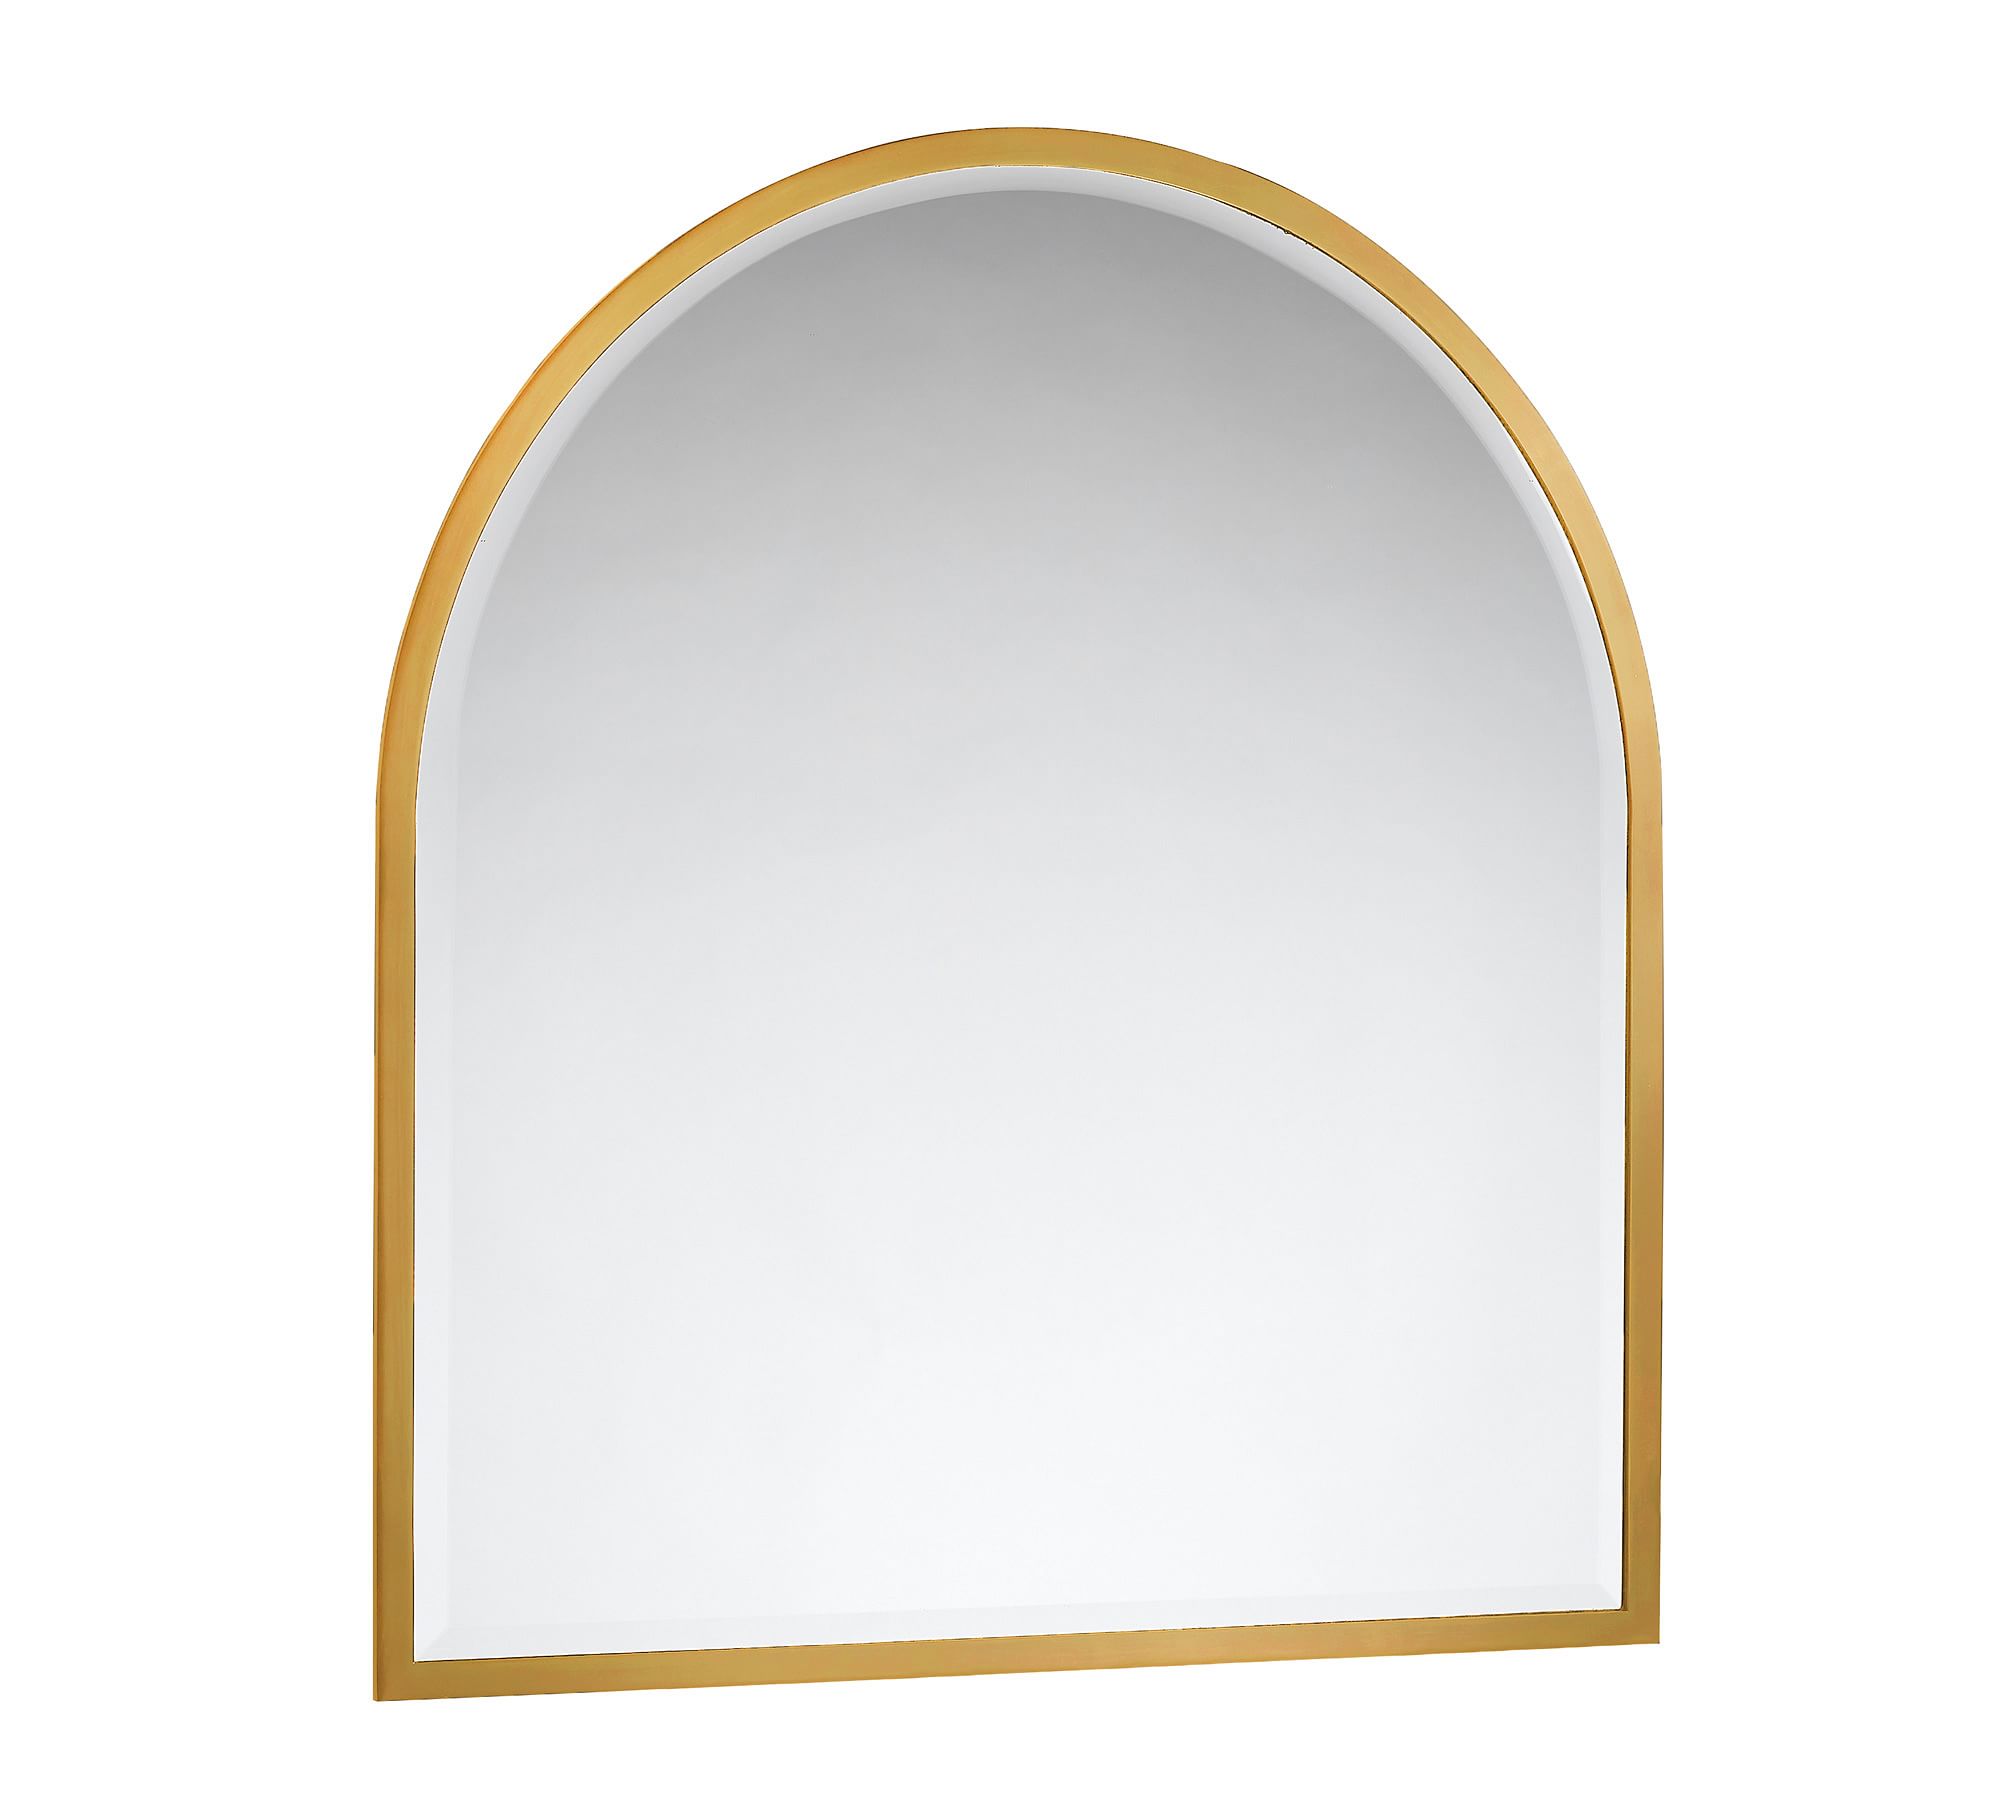 Layne Mantel Mirror